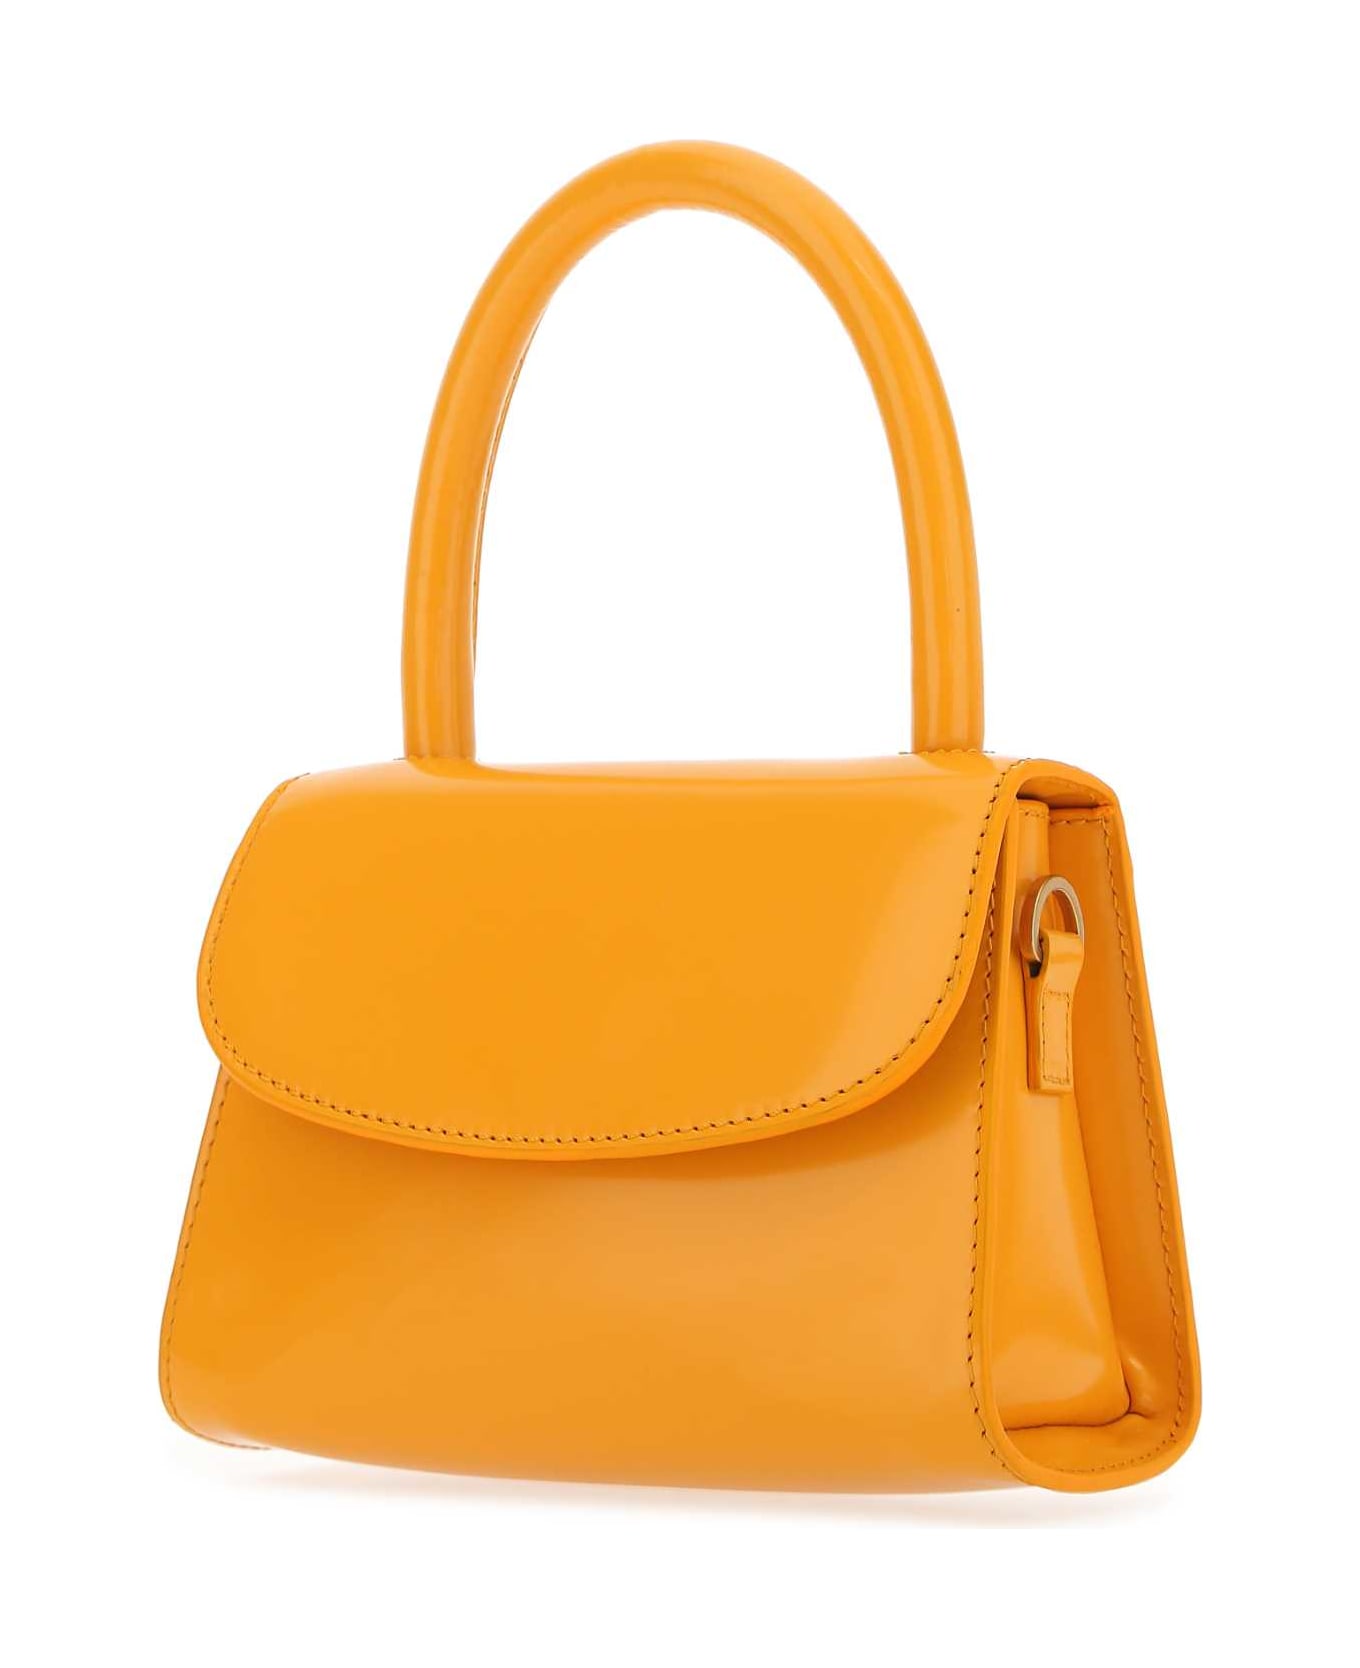 BY FAR Orange Leather Mini Handbag - SUNFLOWER トートバッグ